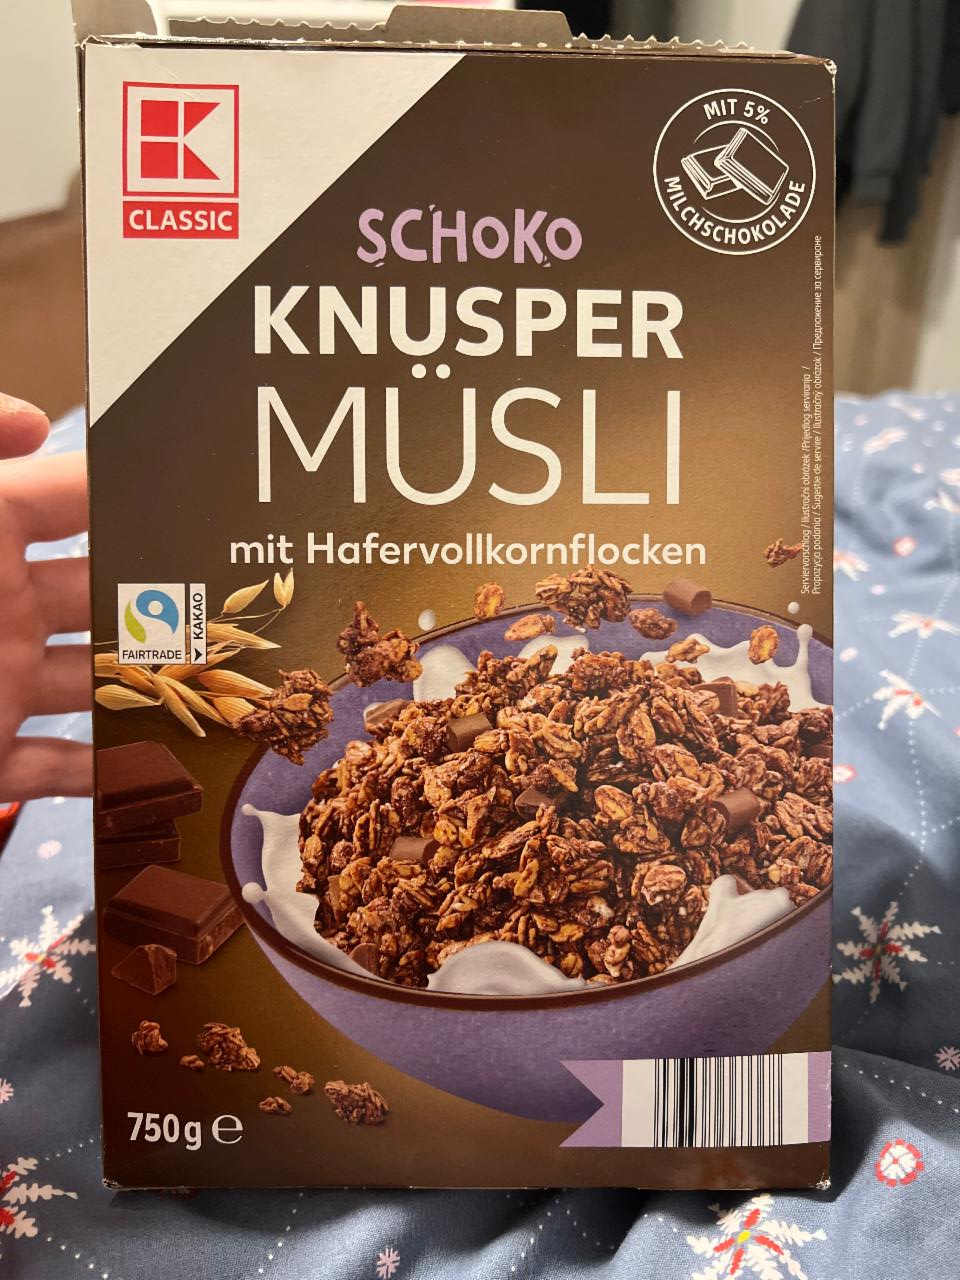 Фото - Мюслі шоколадні Schoko Knusper Musli K-Classic